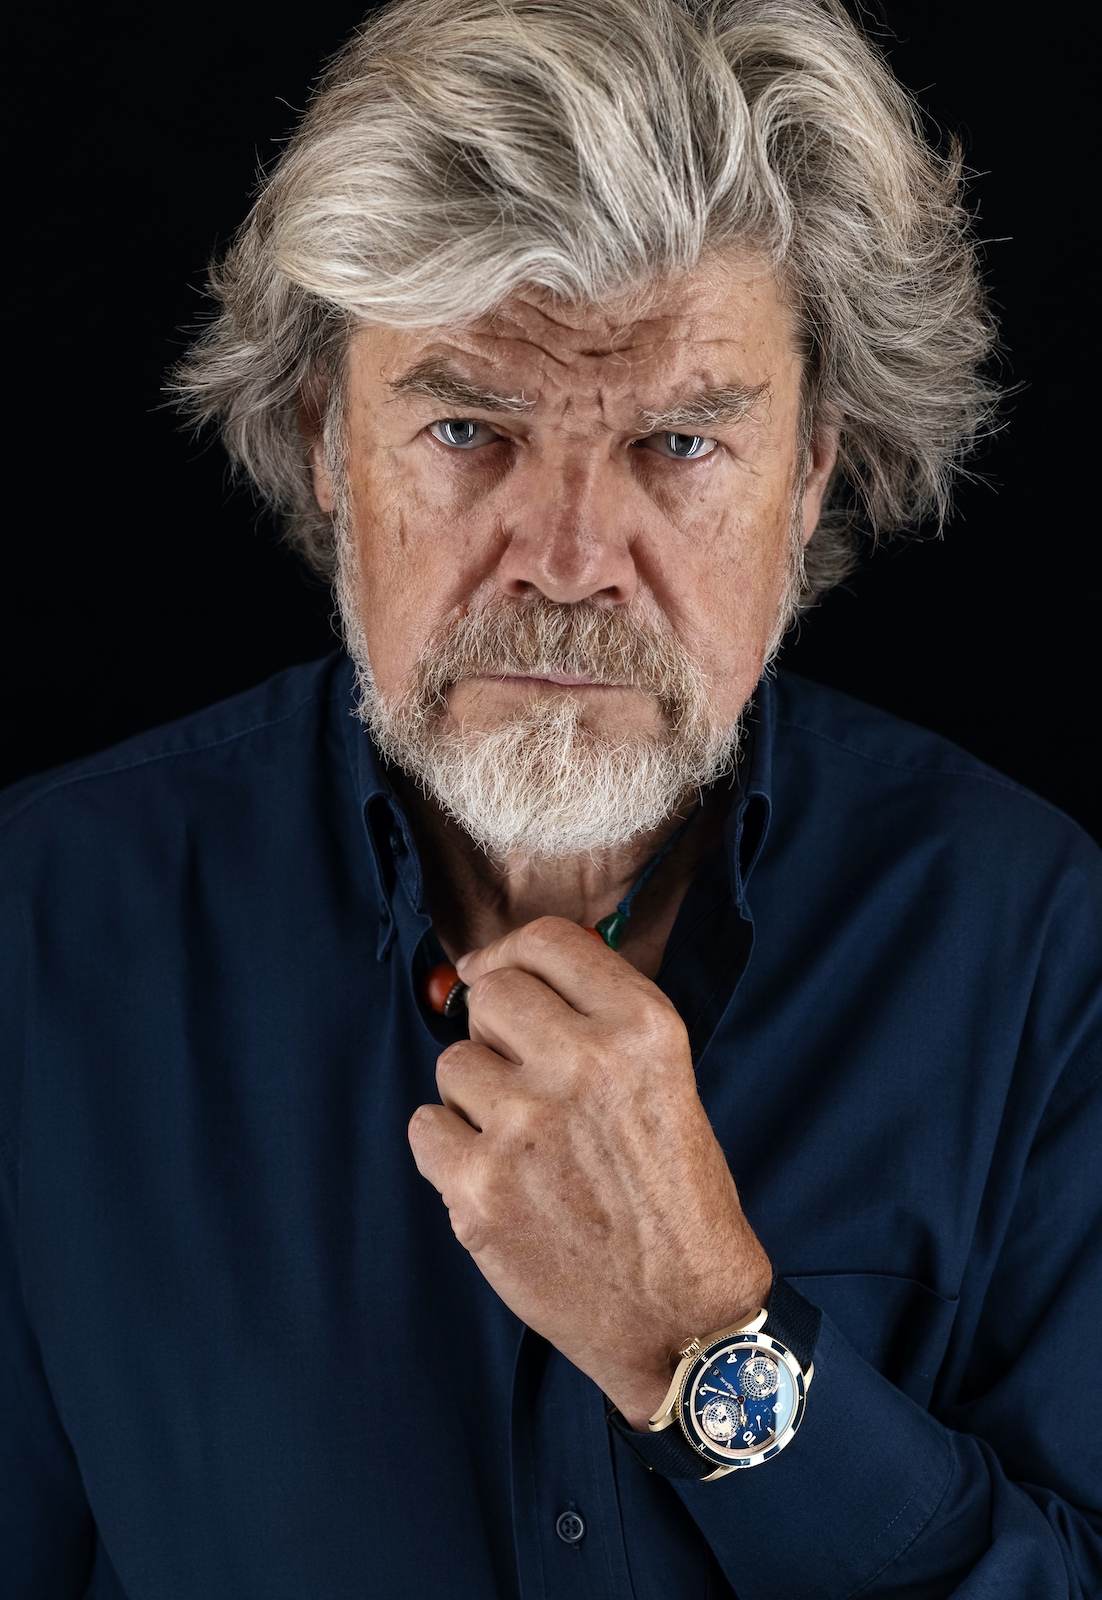 Montblanc 1858 Geosphere Reinhold Messner - lifestyle